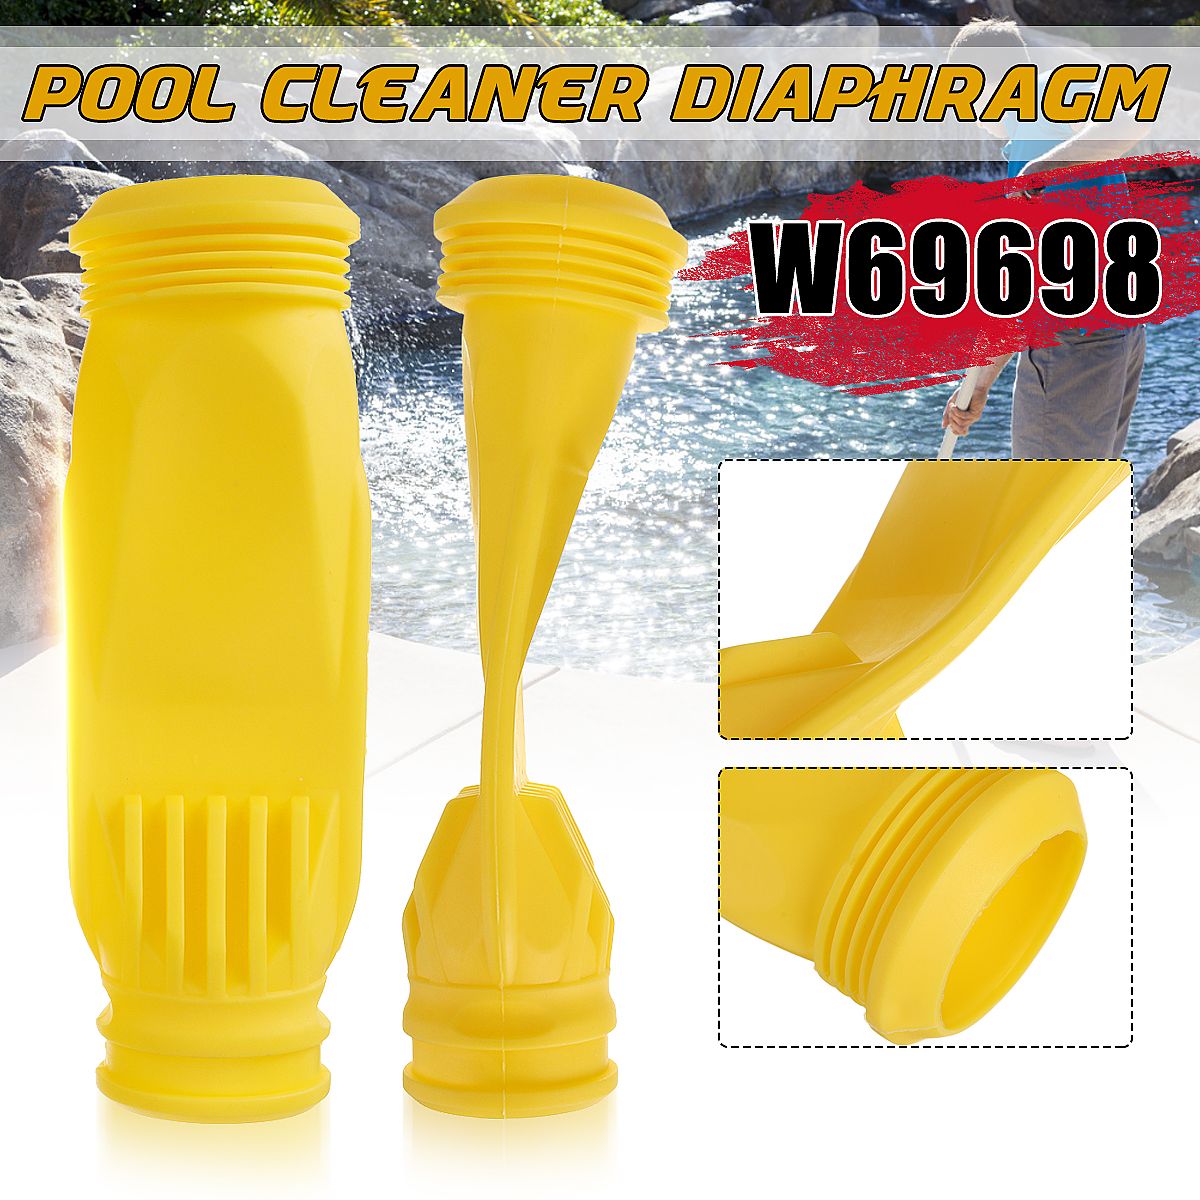 2Pcs-Pool-Cleaner-Diaphragm-WRing-for-Zodiac-Baracuda-G3-G4-W69698-W81701-W81700-1629184